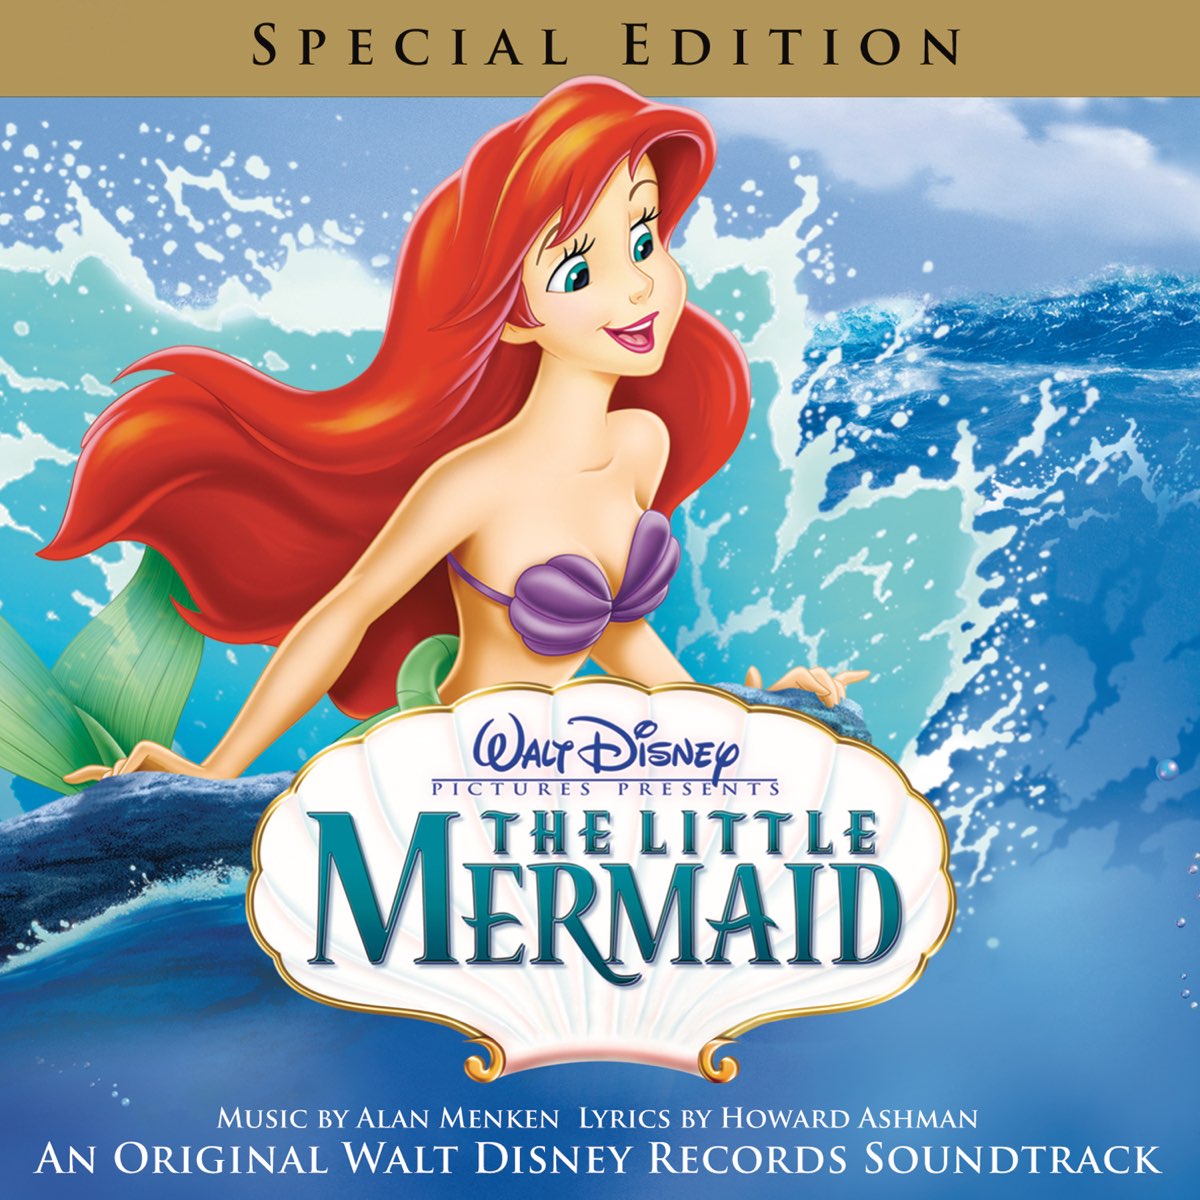 The Little Mermaid (Original Motion Picture Soundtrack) [Special Edition]  by Alan Menken, Howard Ashman, Jodi Benson, Samuel E. Wright & Pat Carroll  on Apple Music